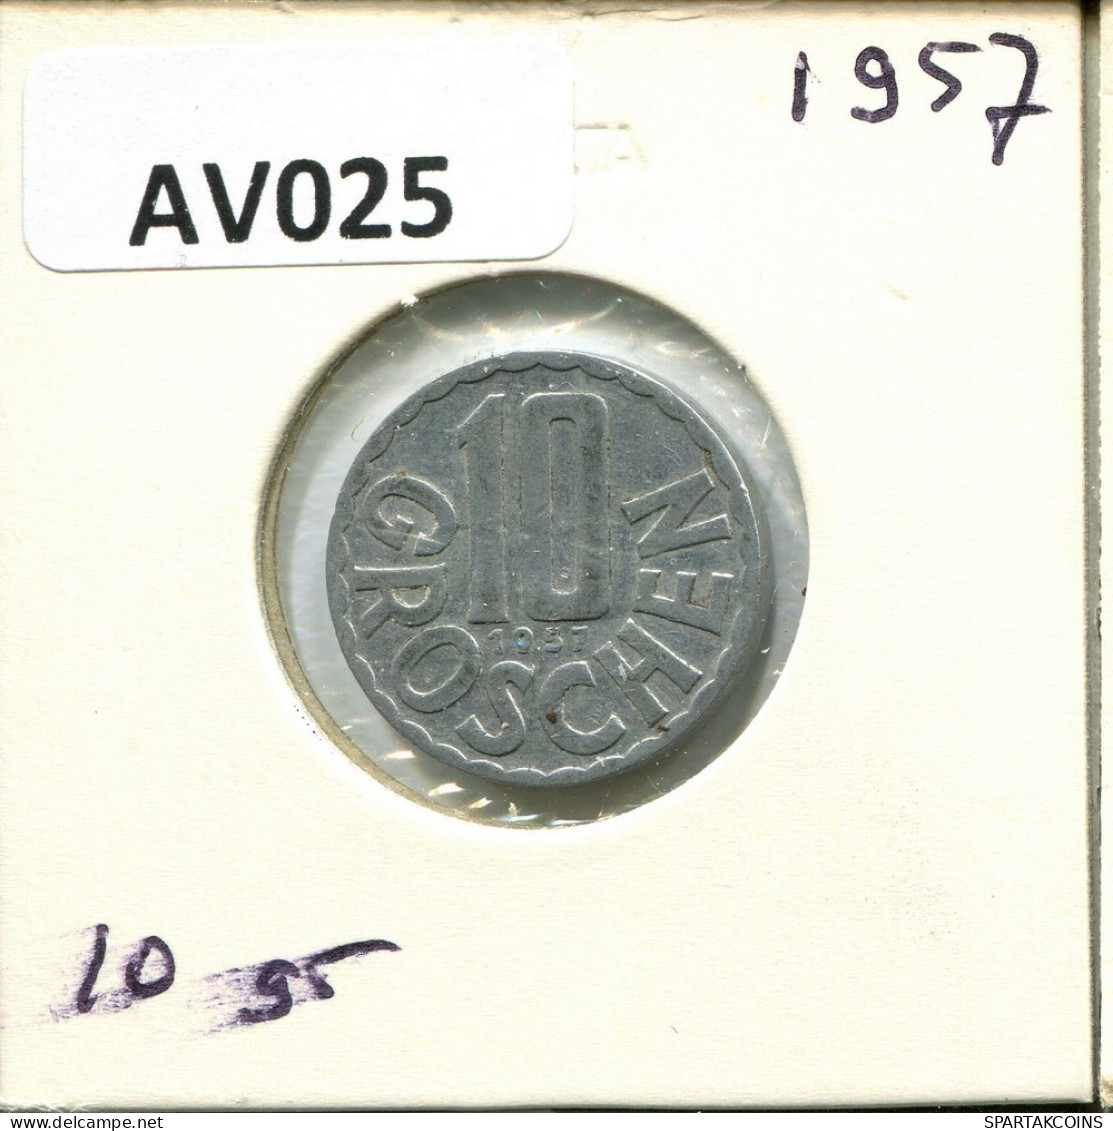 10 GROSCHEN 1957 AUTRICHE AUSTRIA Pièce #AV025.F.A - Autriche